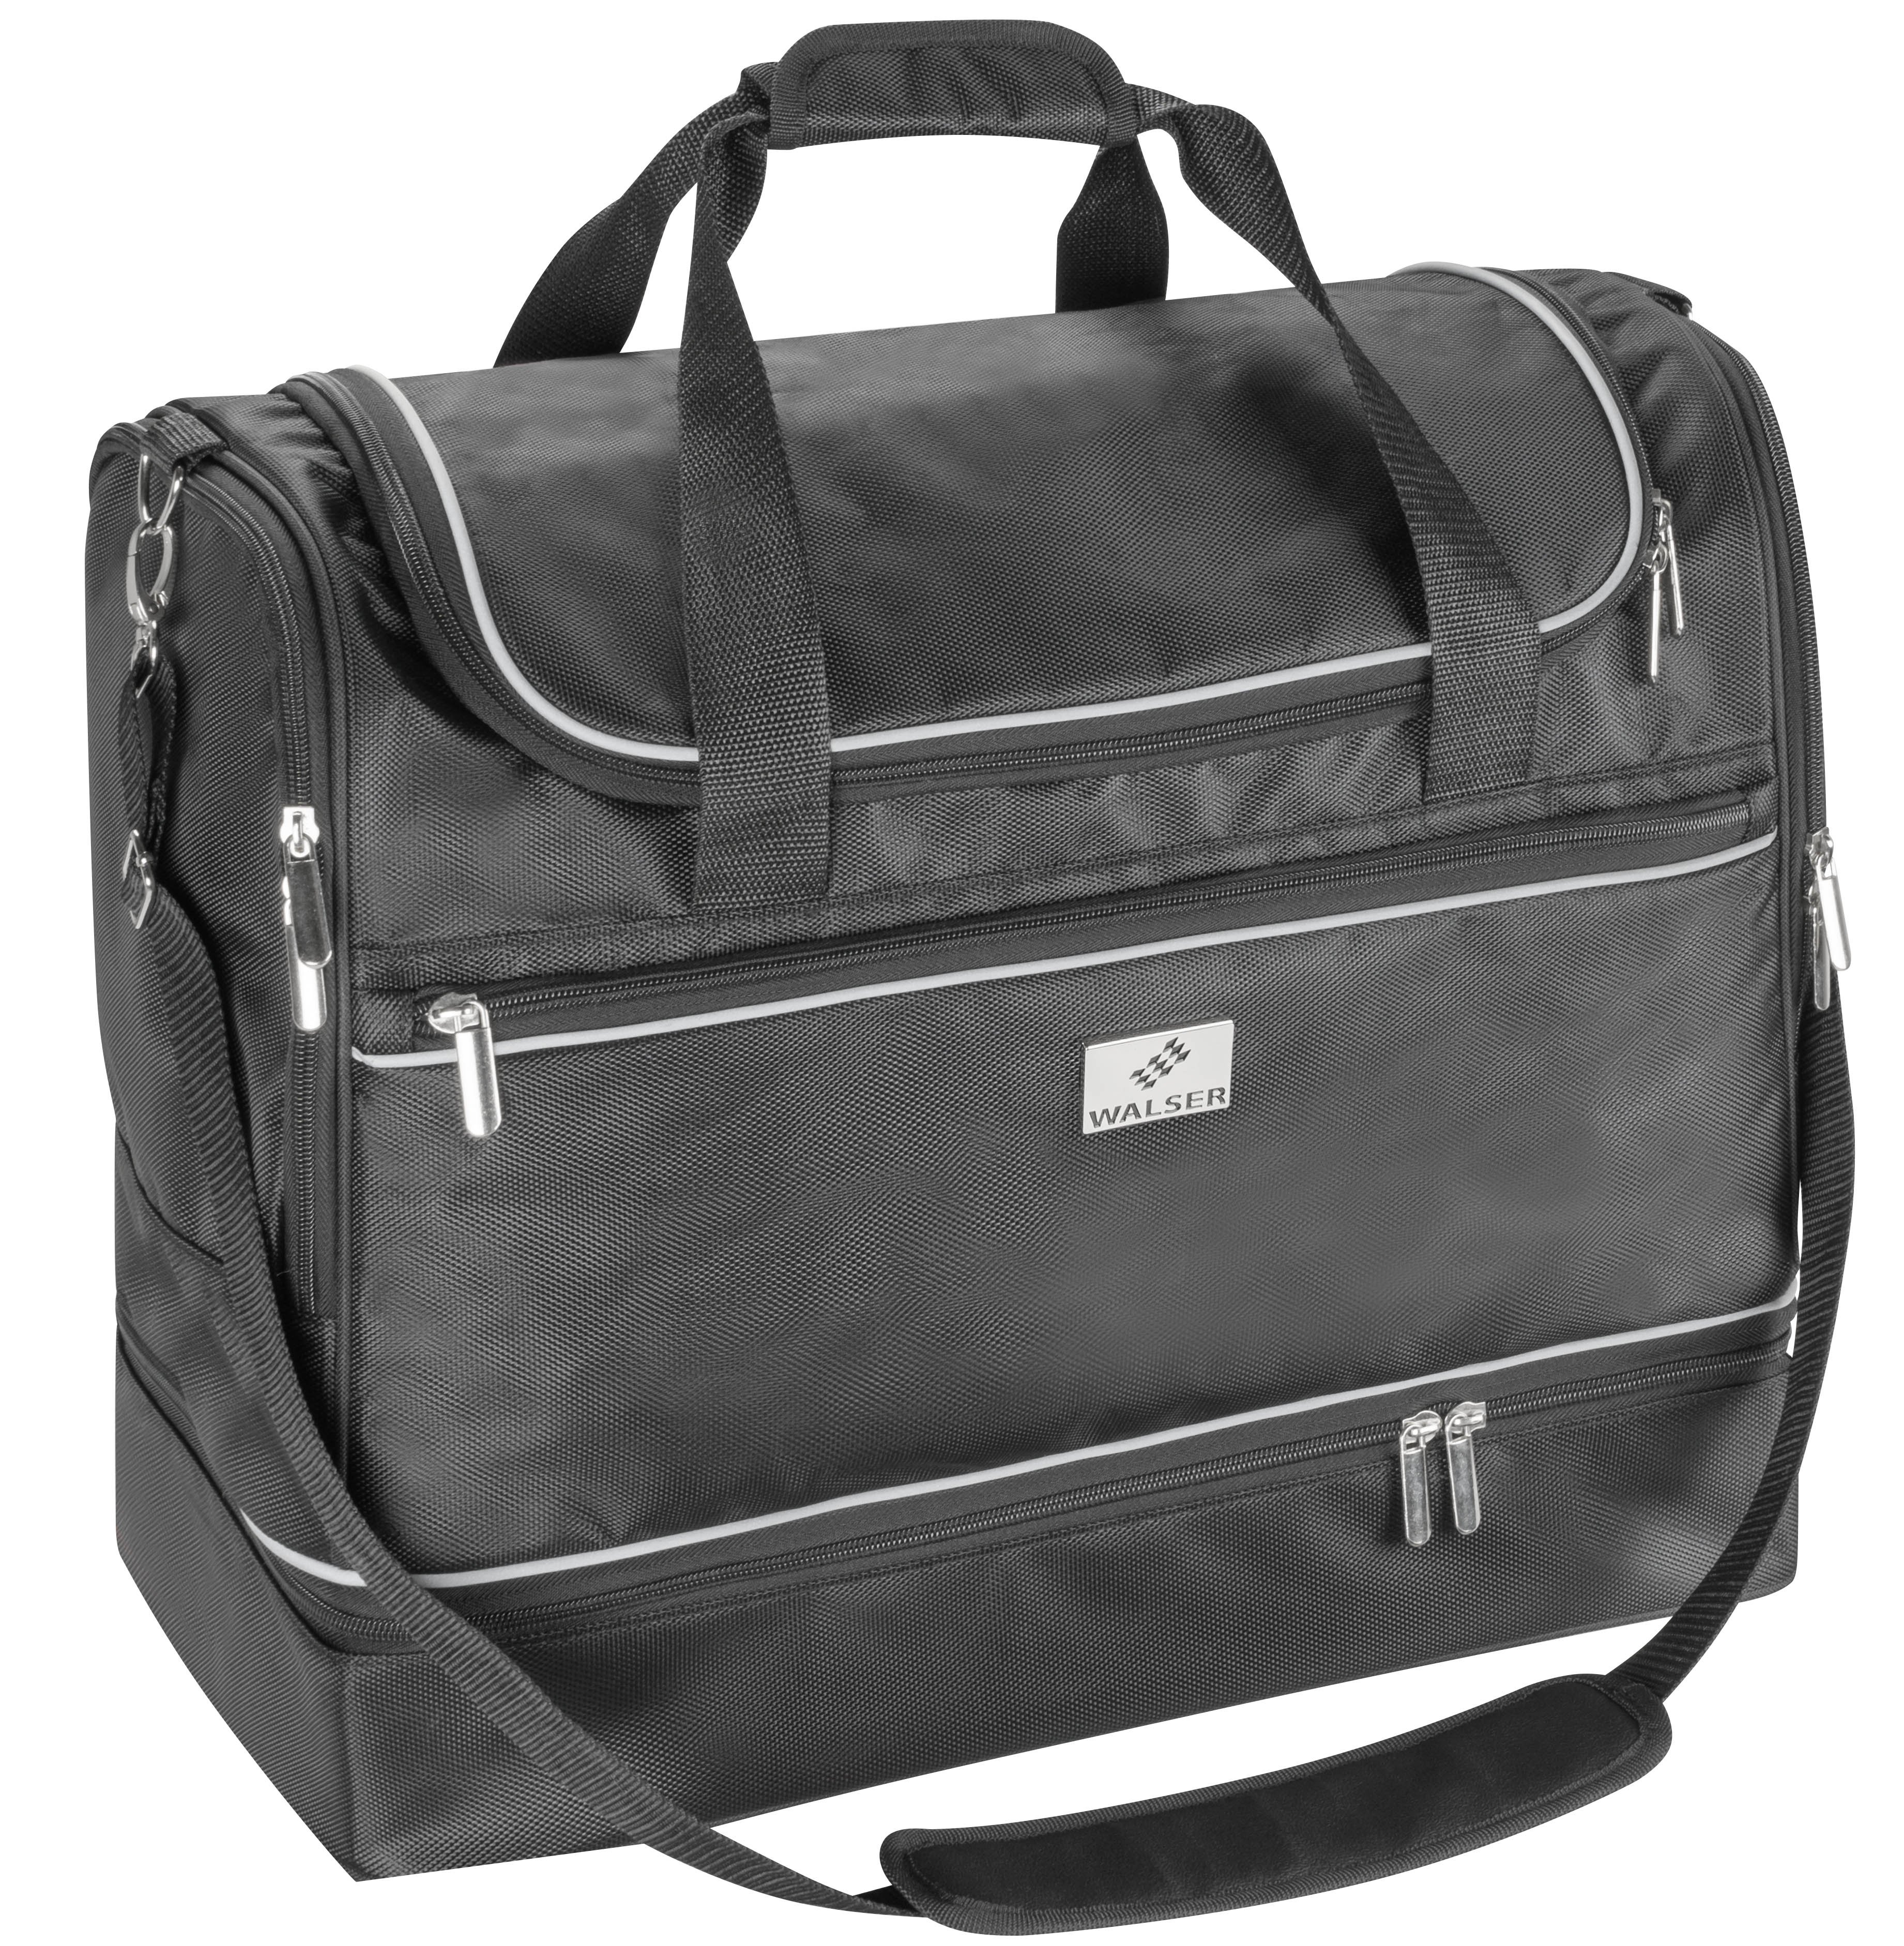 Carbags sports bag 60L - 40x30x45cm